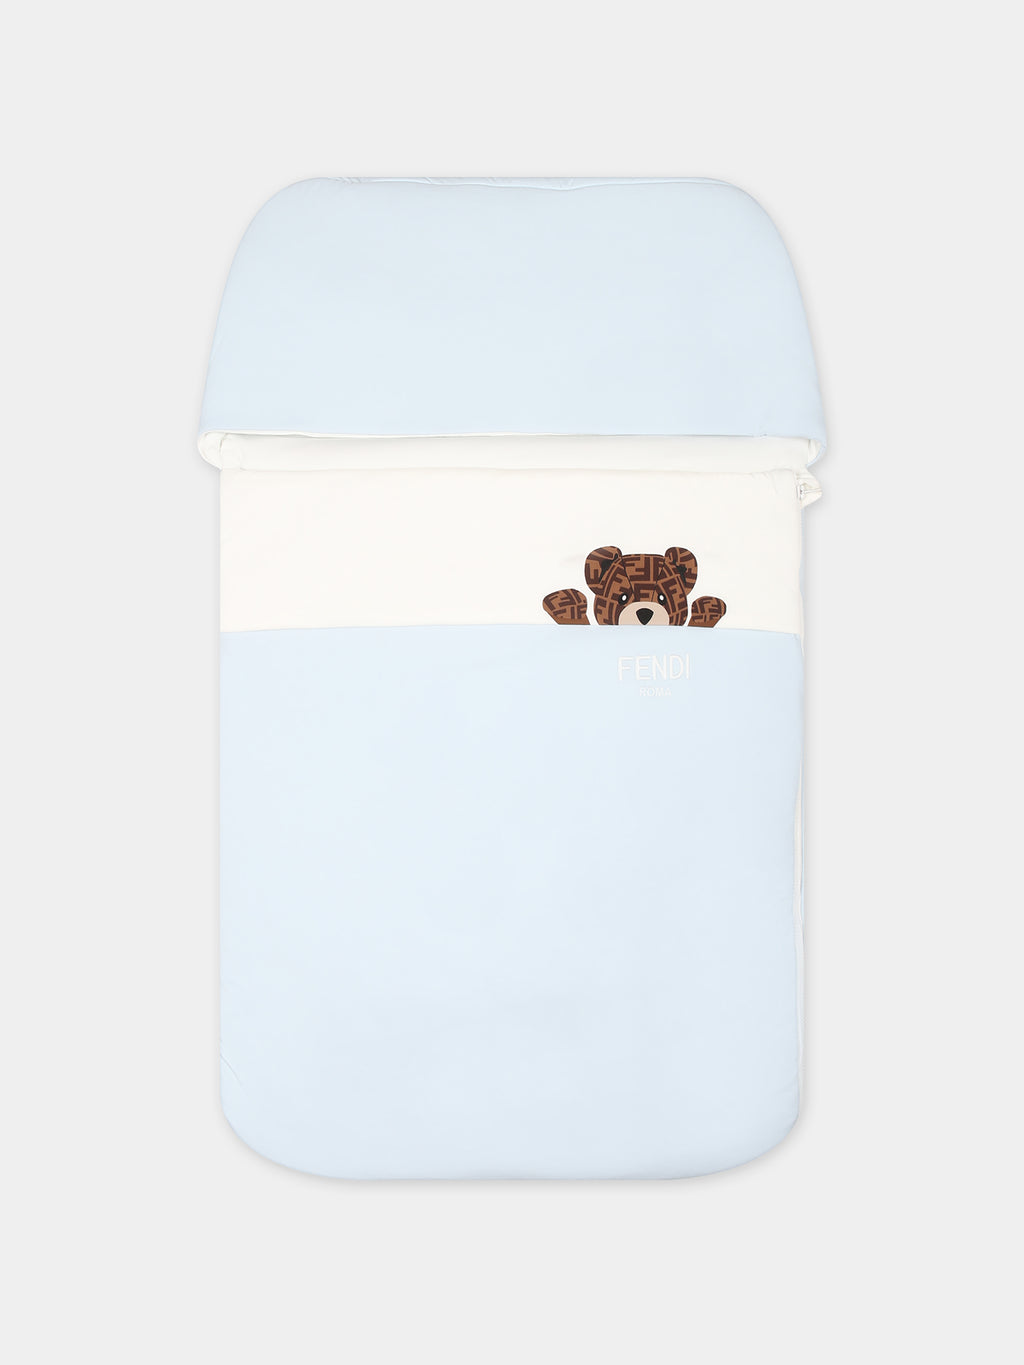 Light blue sleeping bag for baby boy with bear and Fendi logo